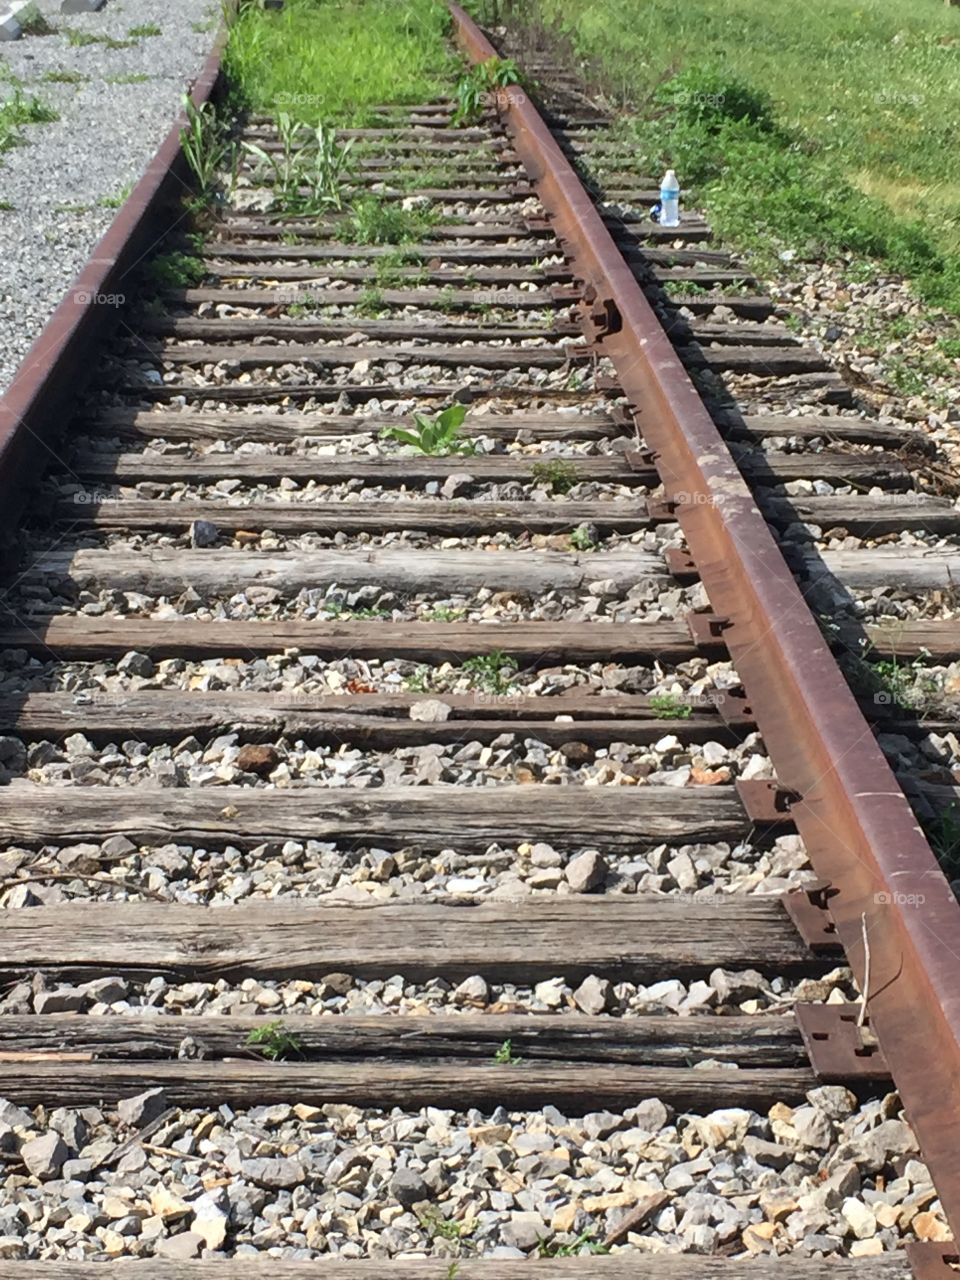 Wooden train tracks